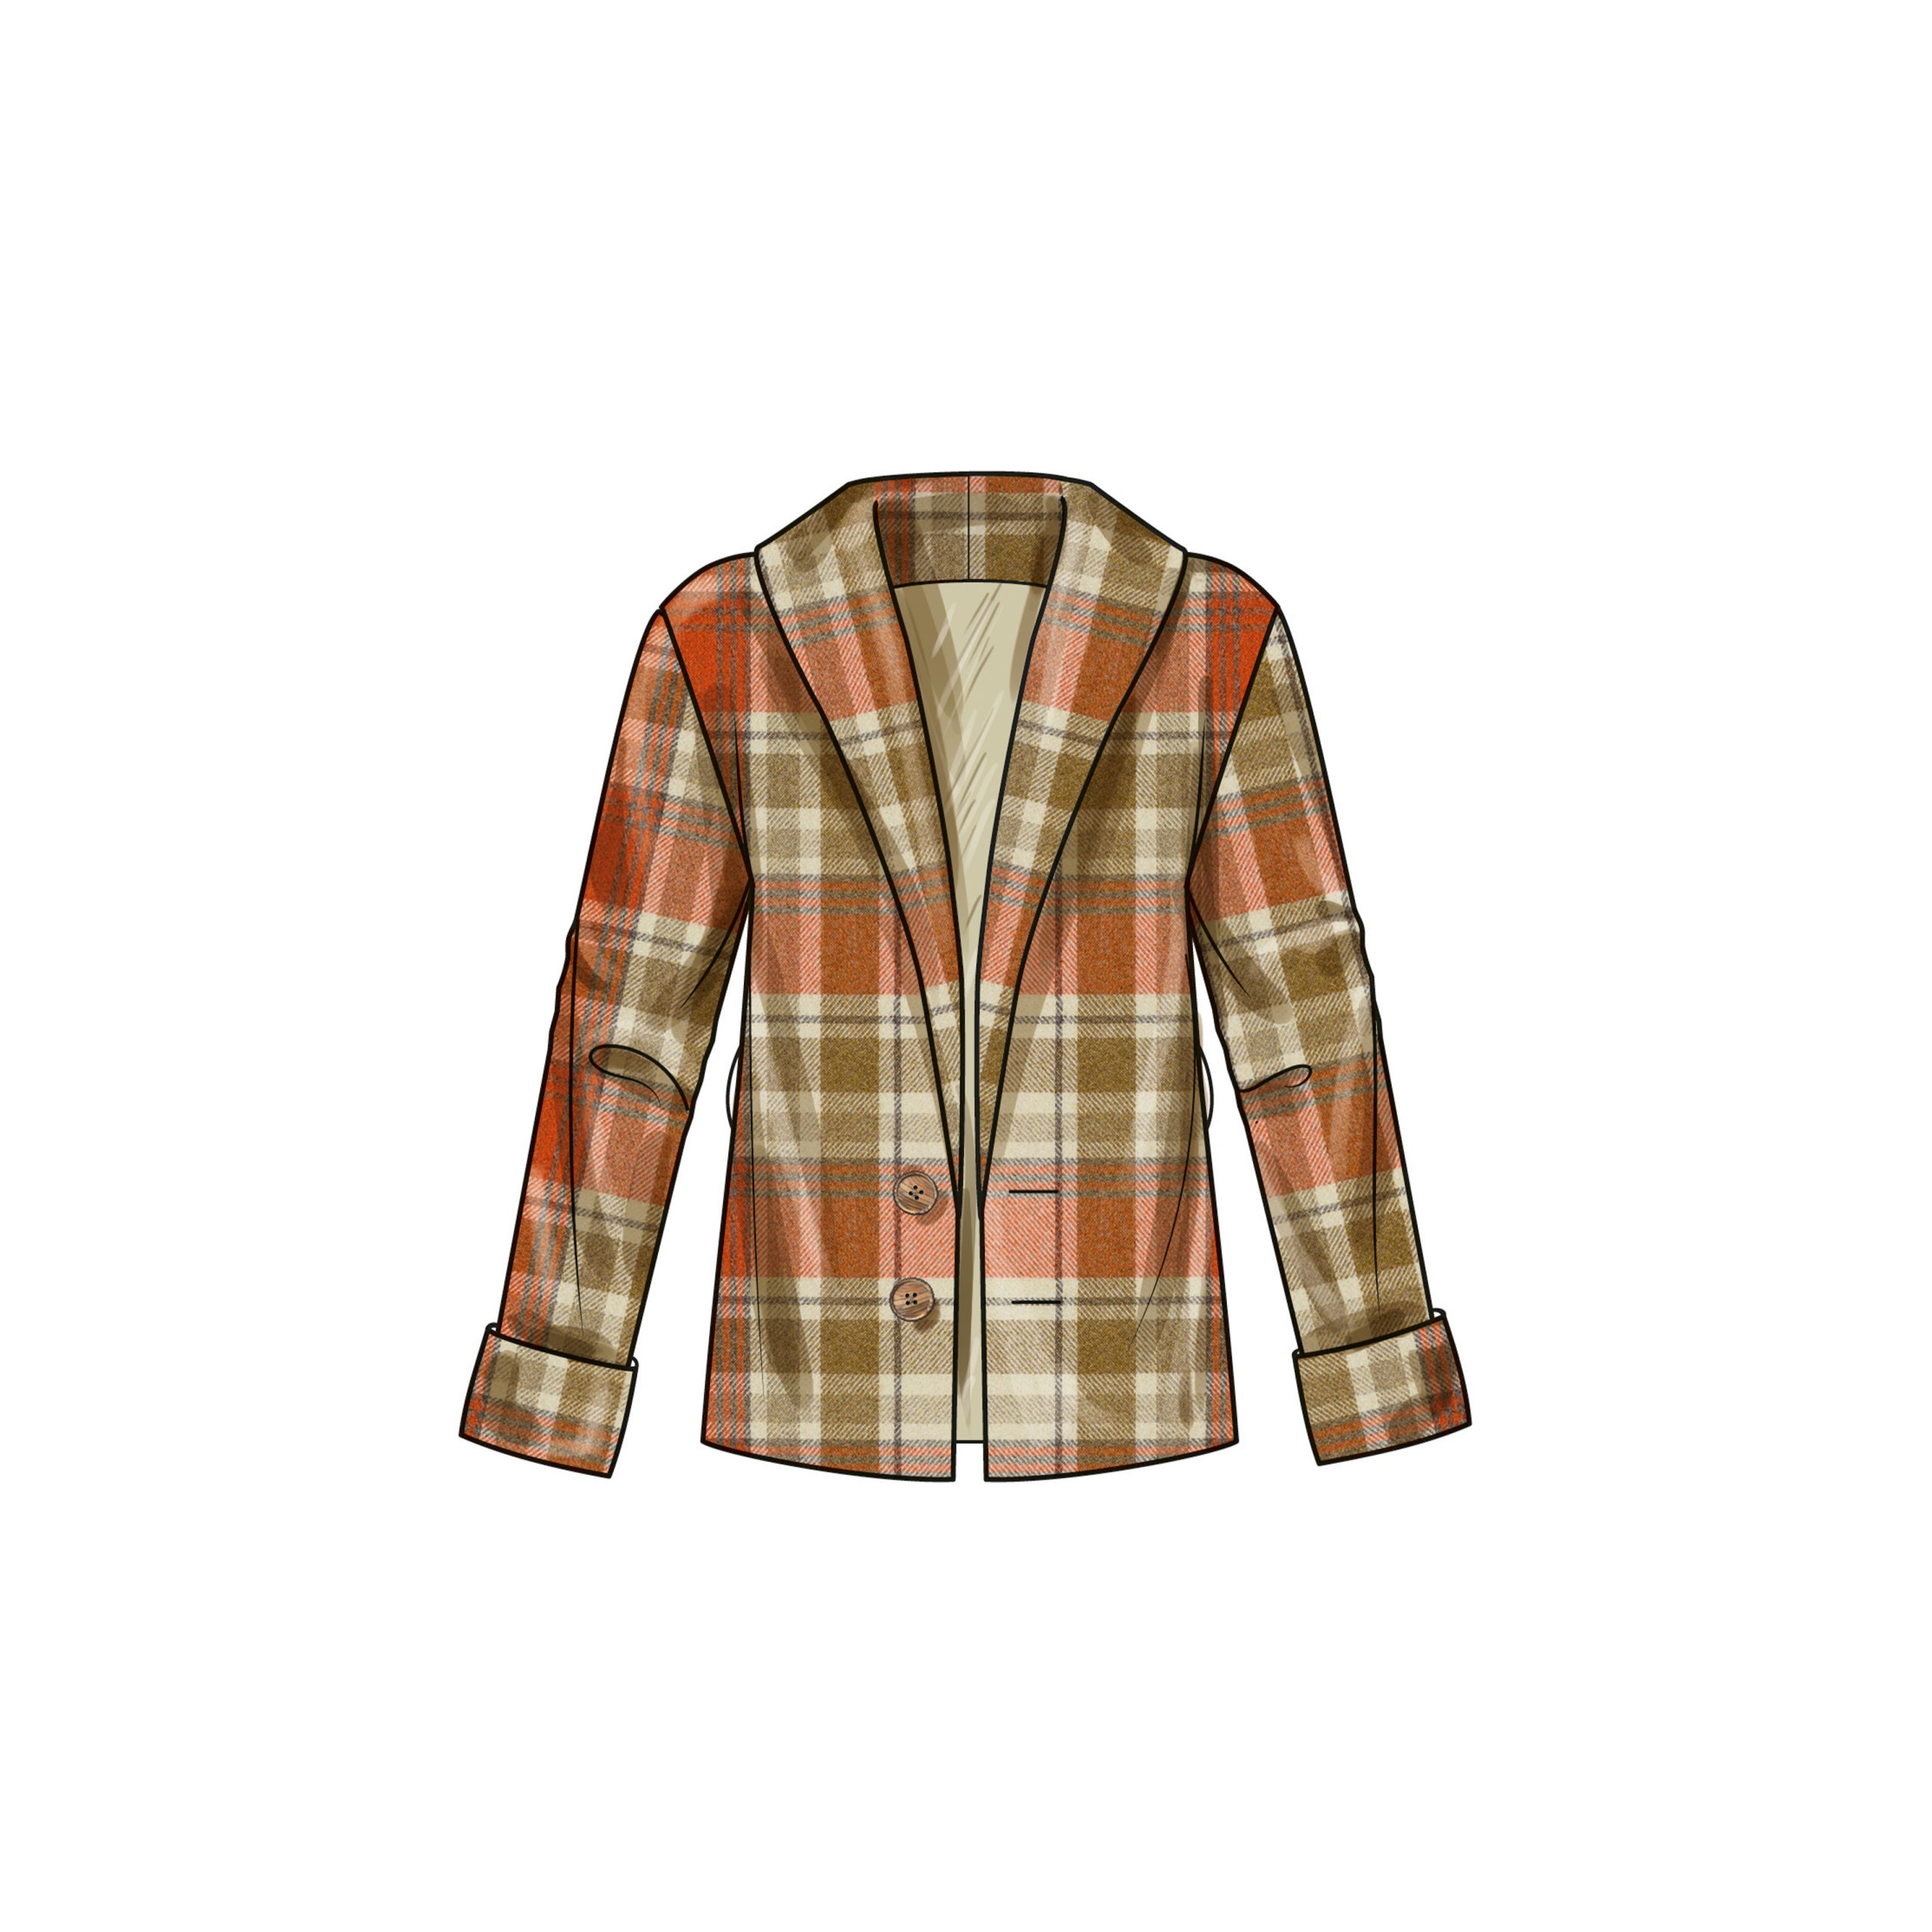 Simplicity Unisex Jacket, Waistcoat and Belt S9692